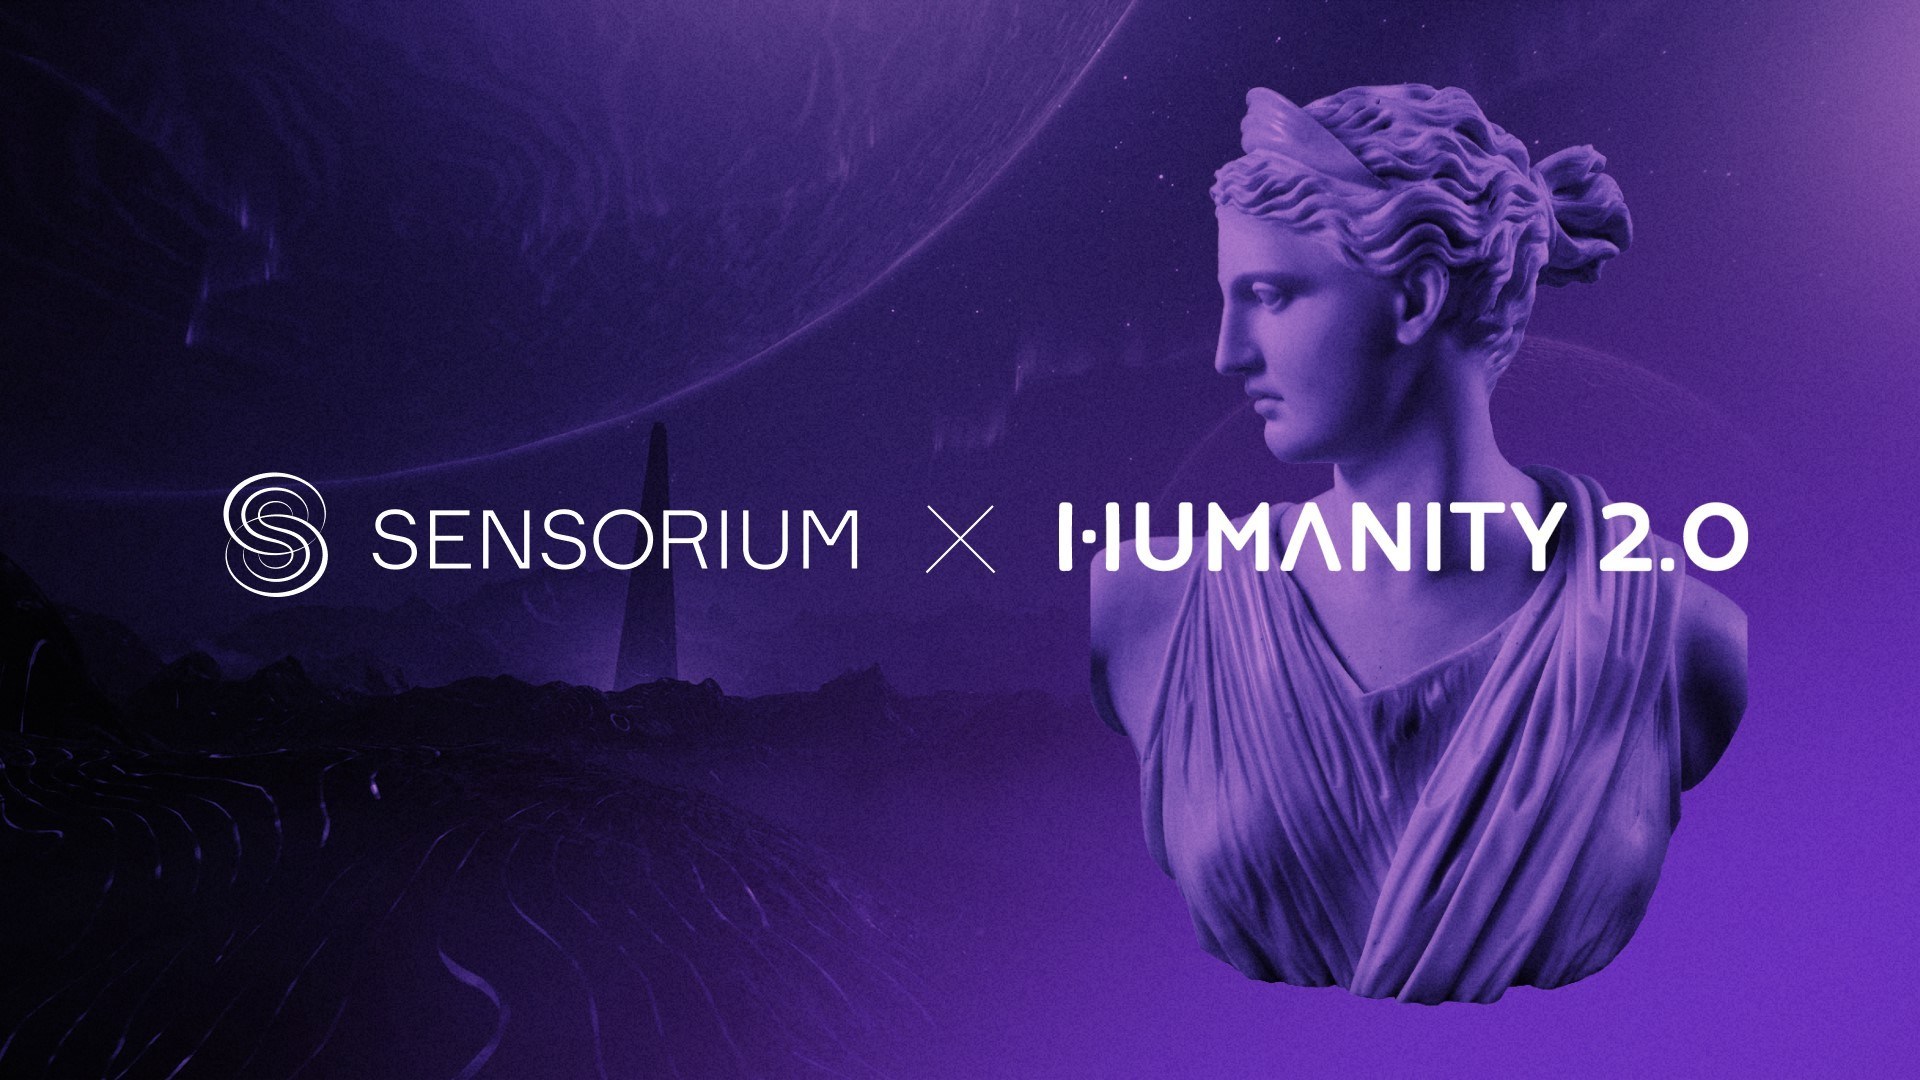 Sensorium cooperates with Vatican's Humanity 2.0